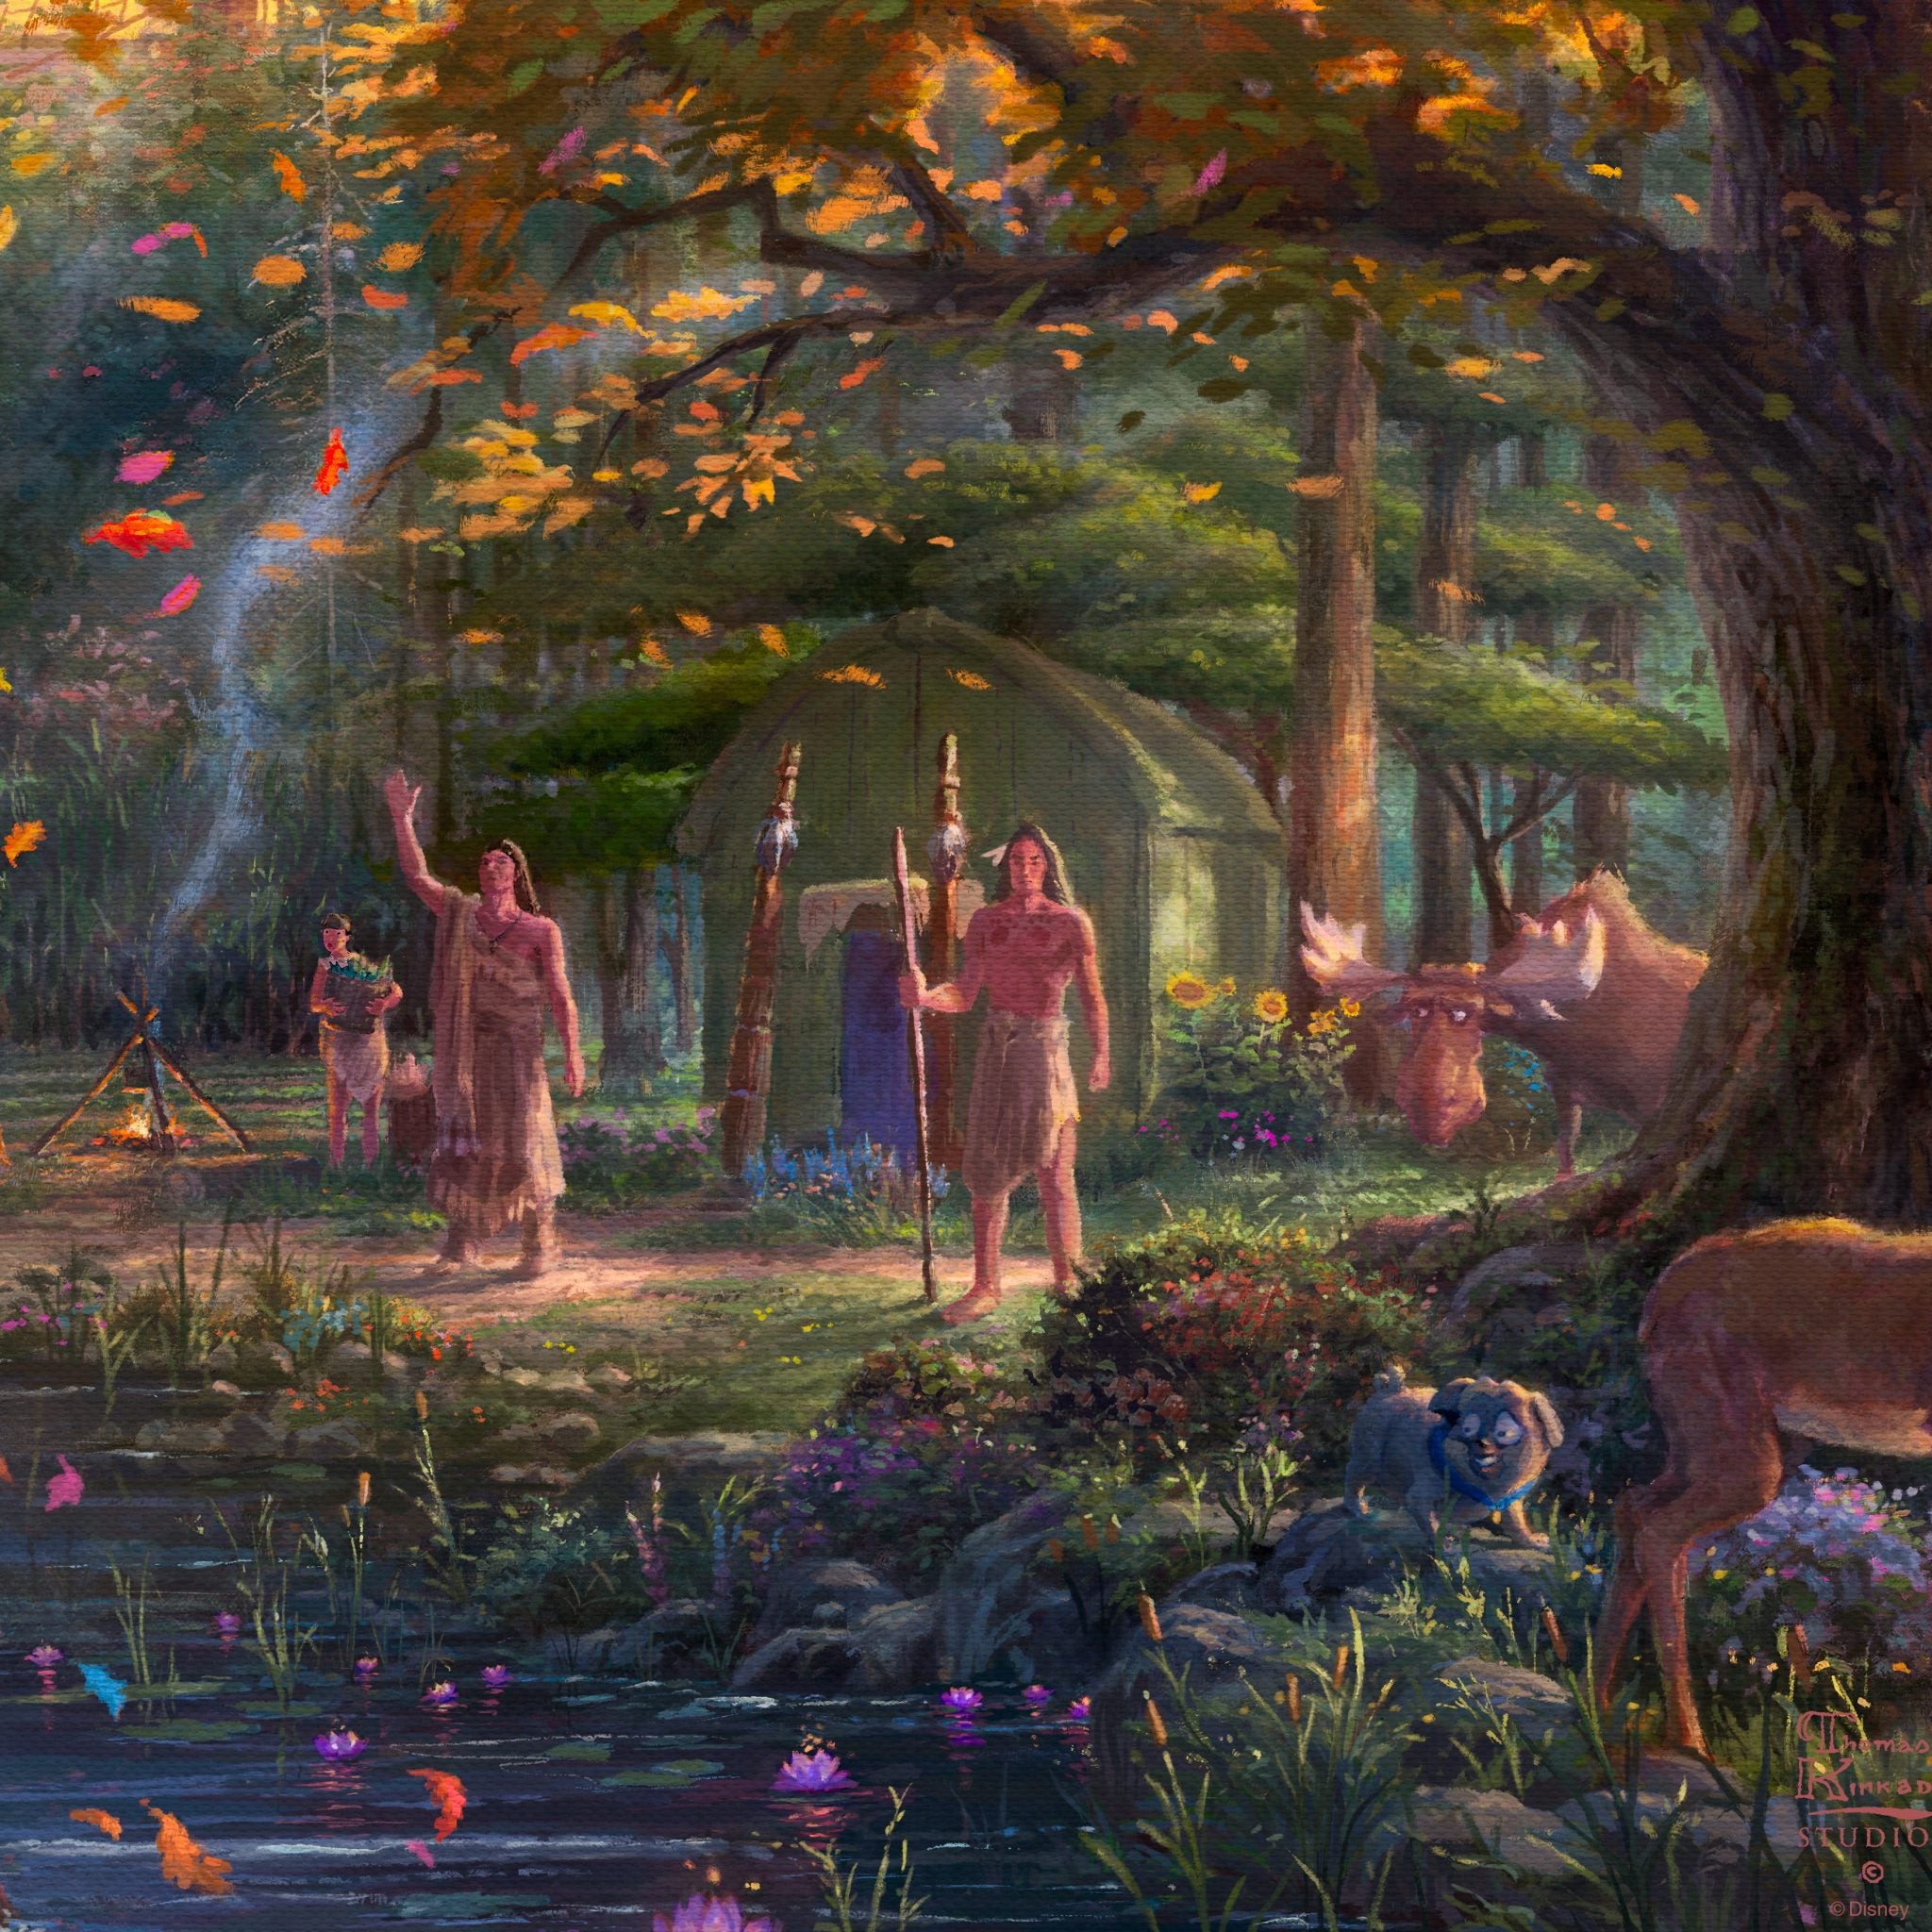 Closeup #2 -  Pocahontas family waving by the river bank. 